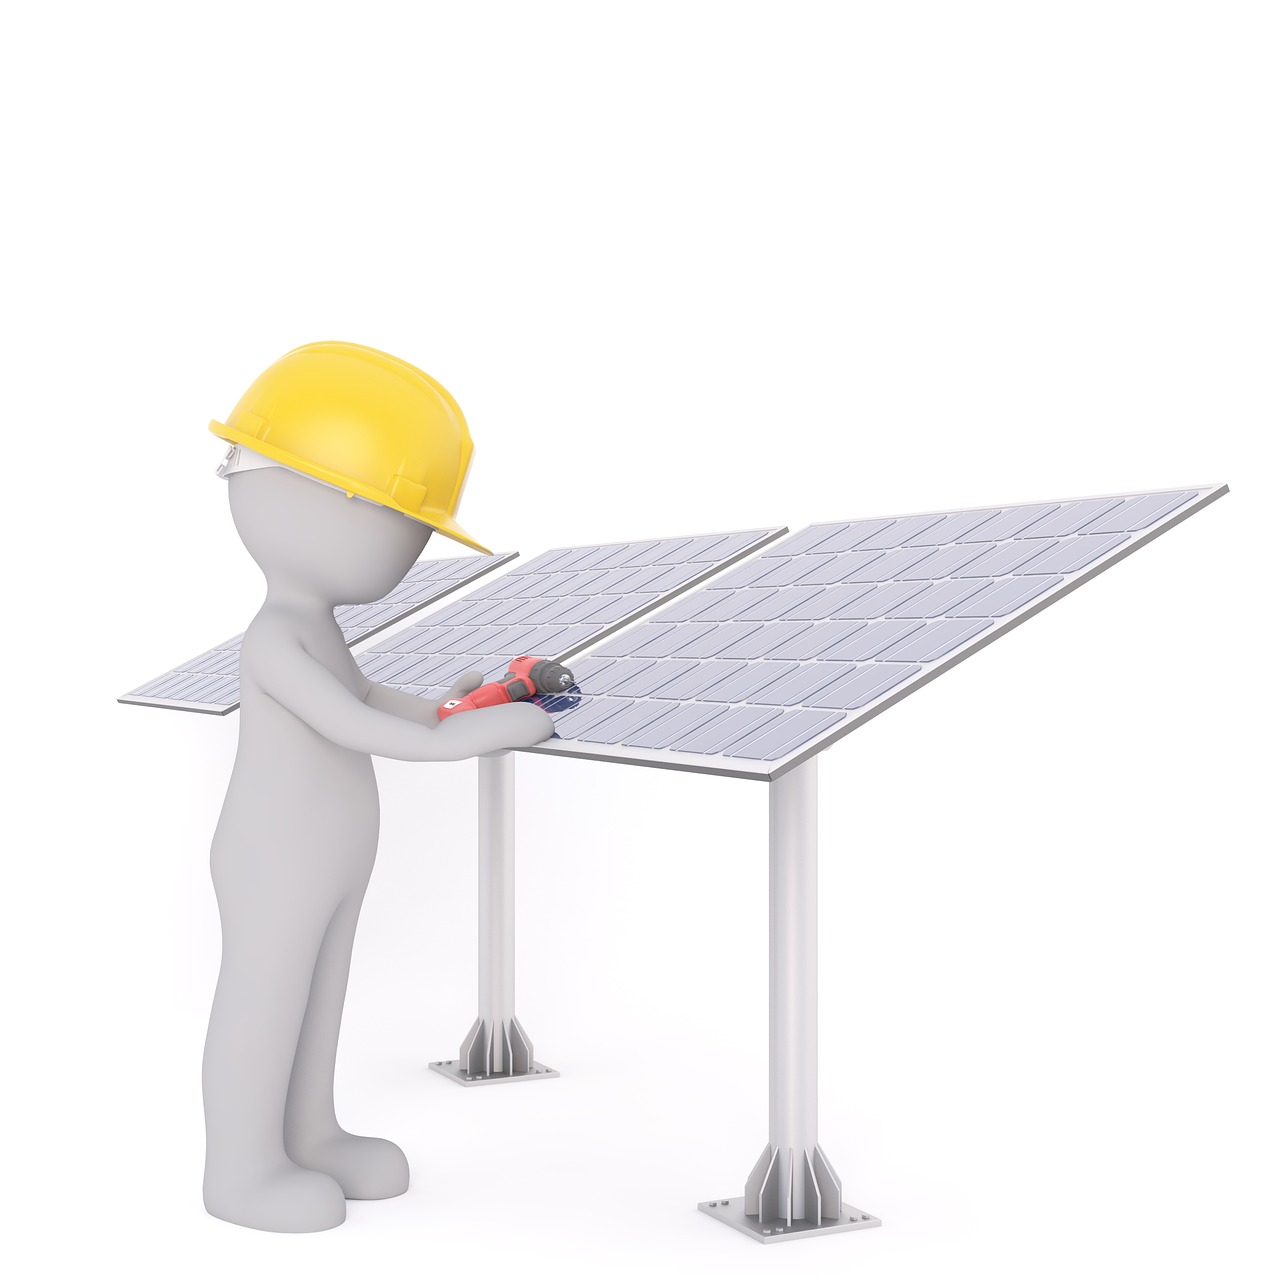 Can I Install Solar Panels Myself?